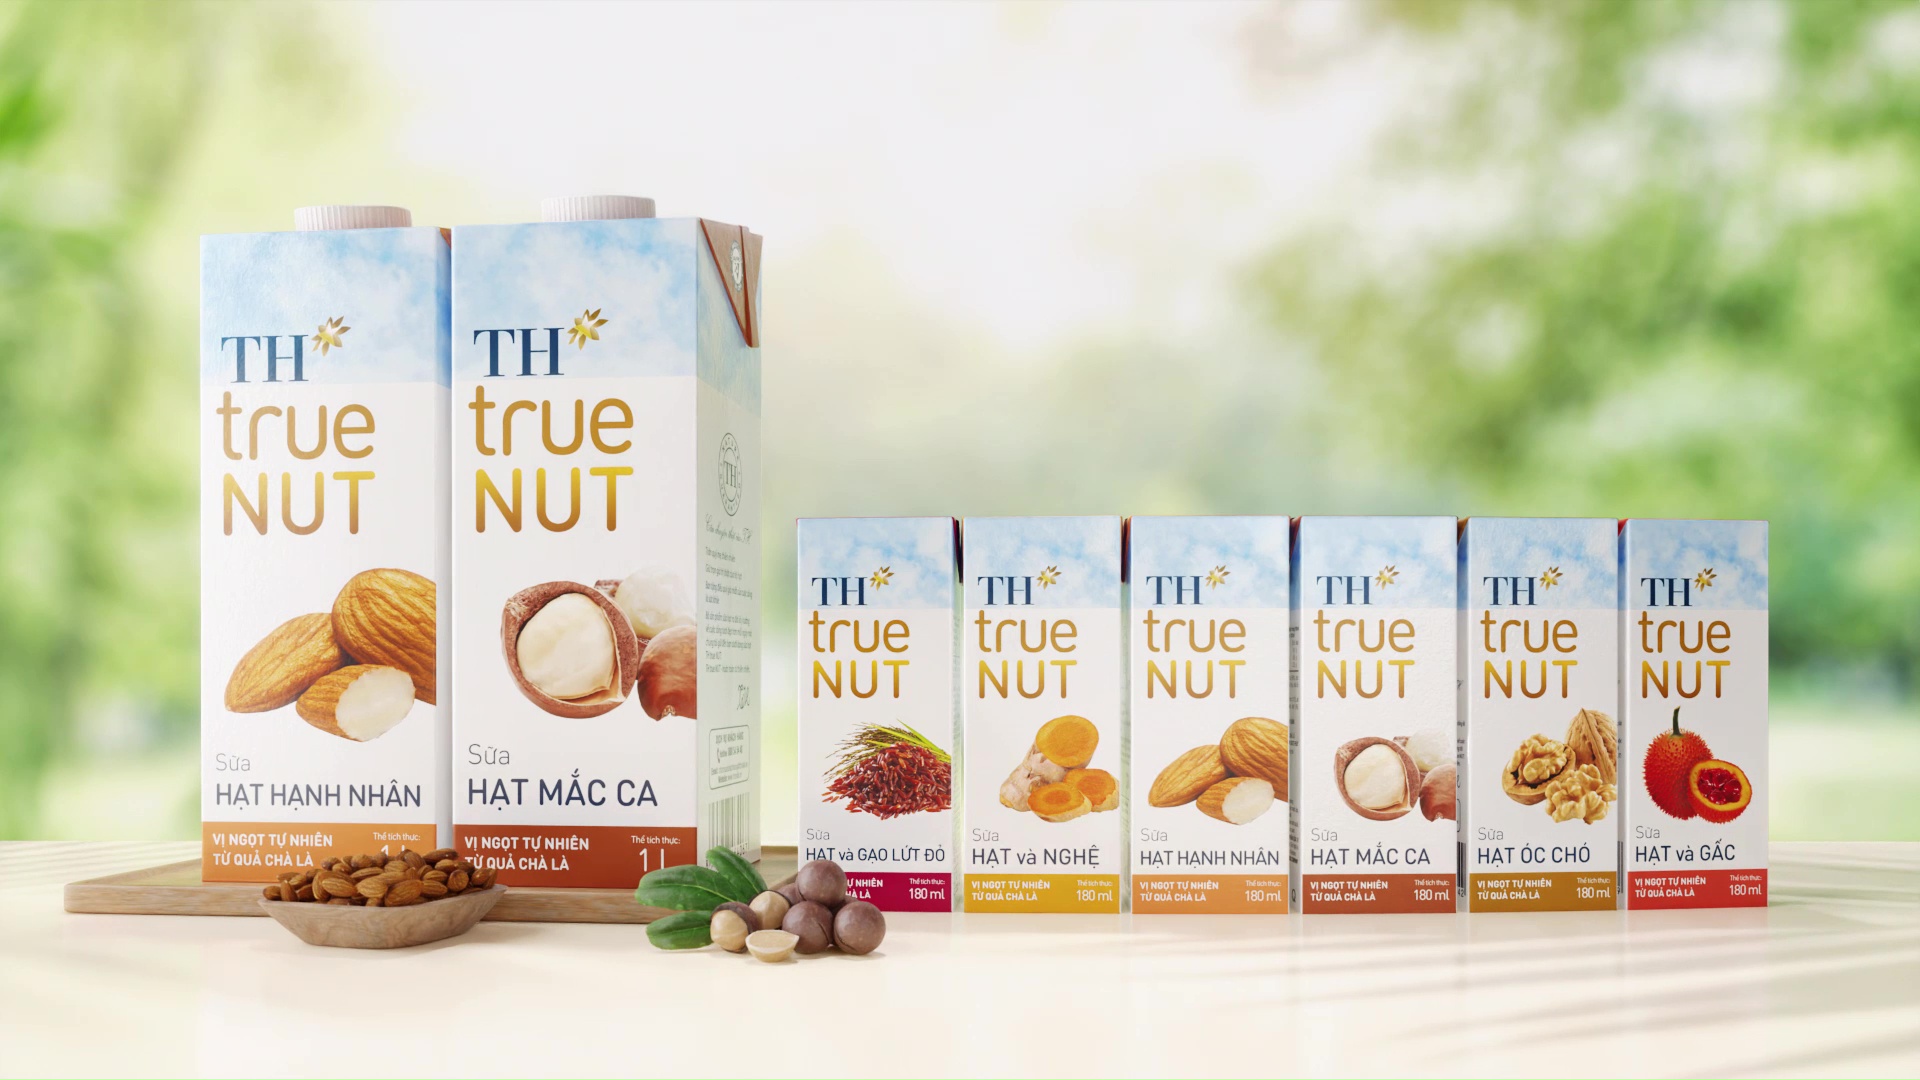 3D TH true NUT – Healthier with better taste